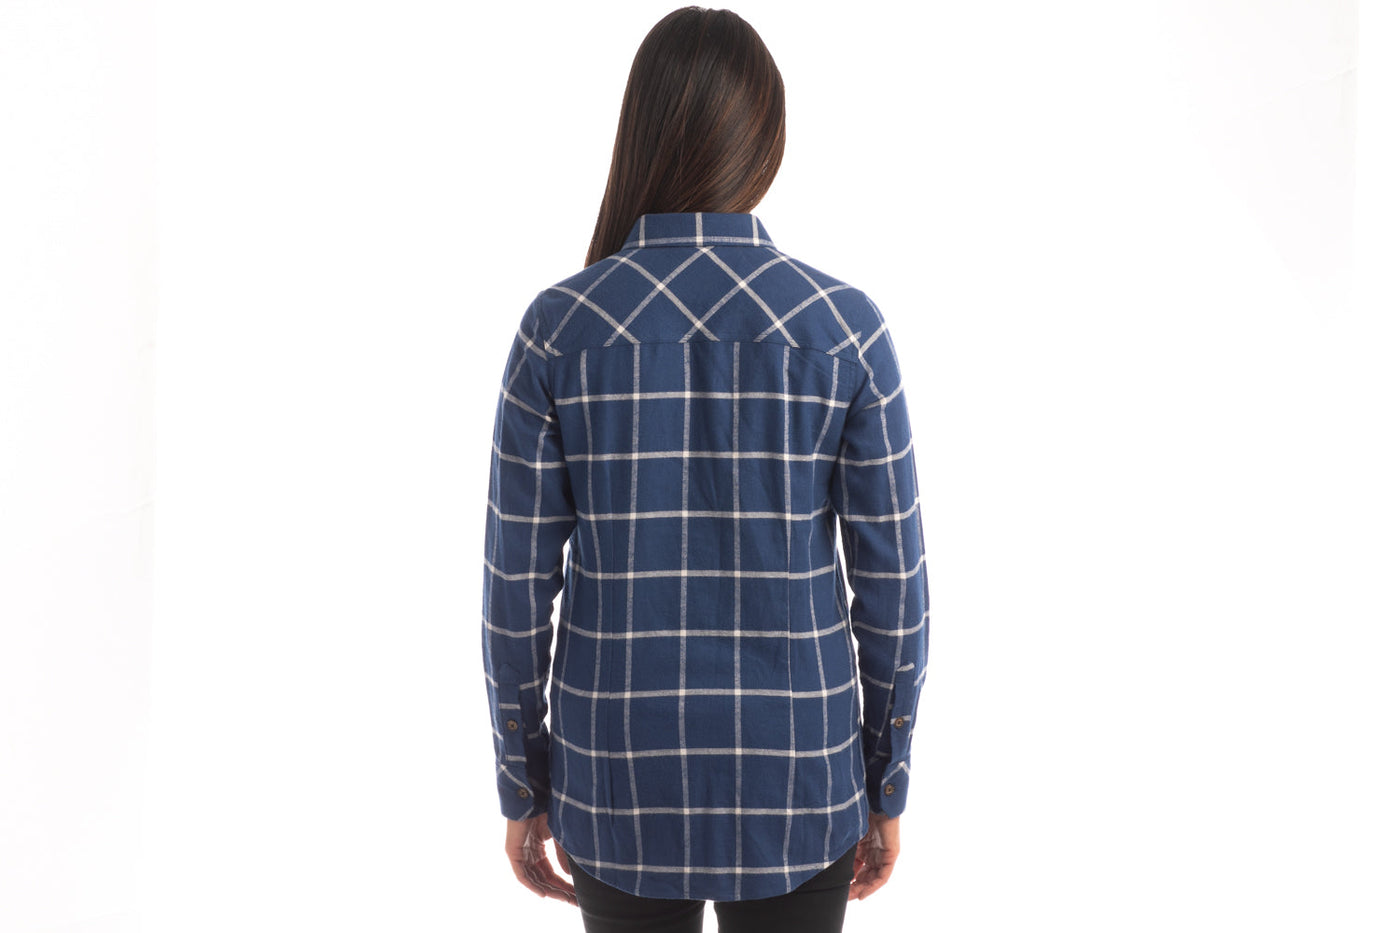 Women's Every Day Flannel Shirt- Billings Blue - Bears Lining